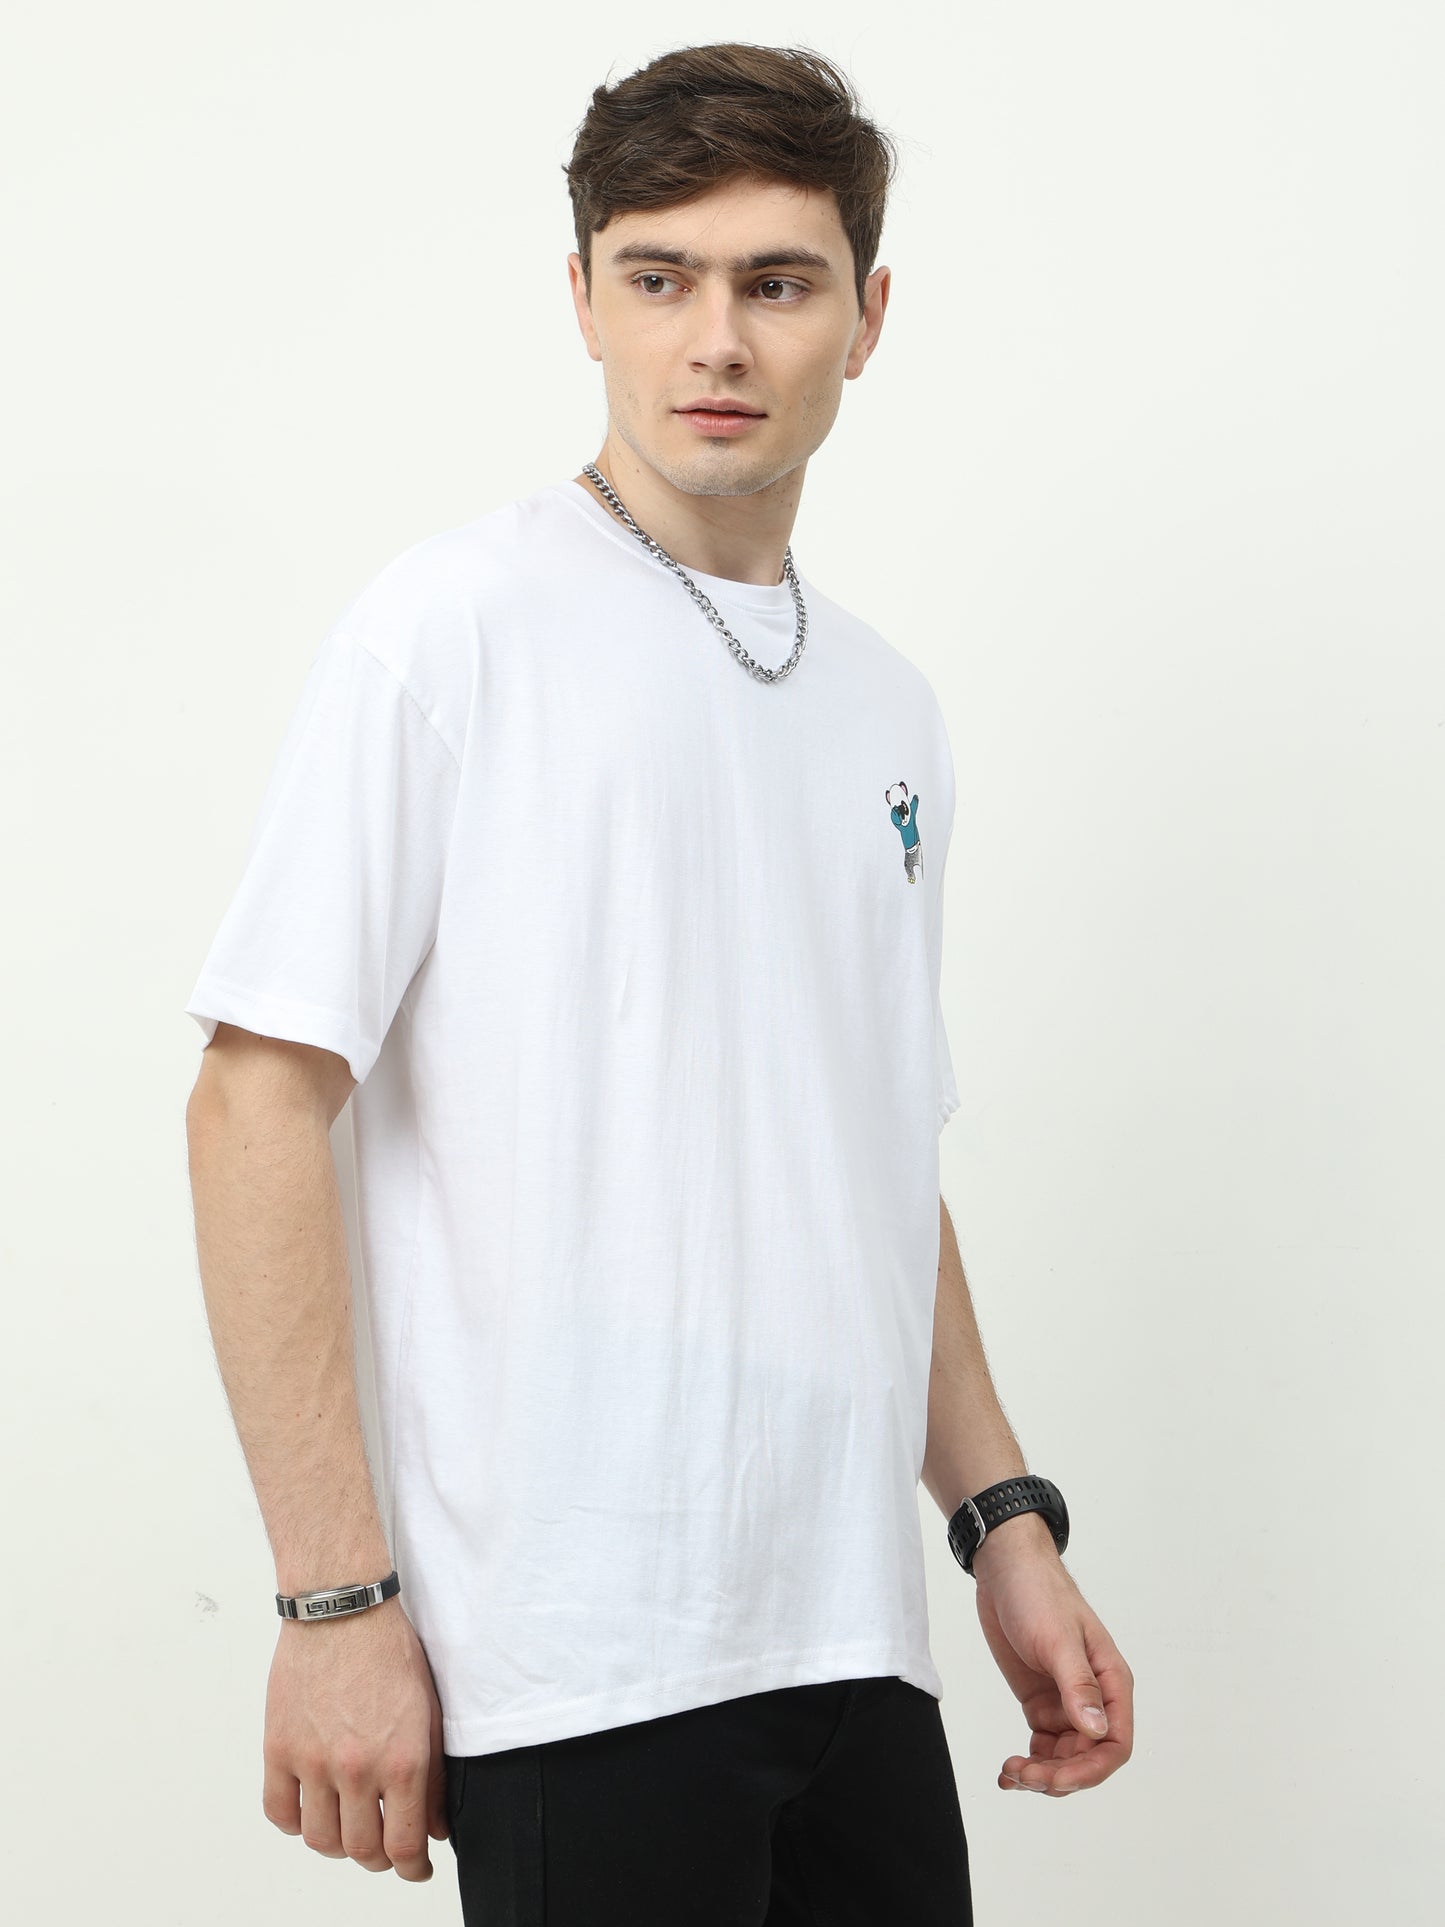 White Panda Printed Oversized T-shirt - UNISEX